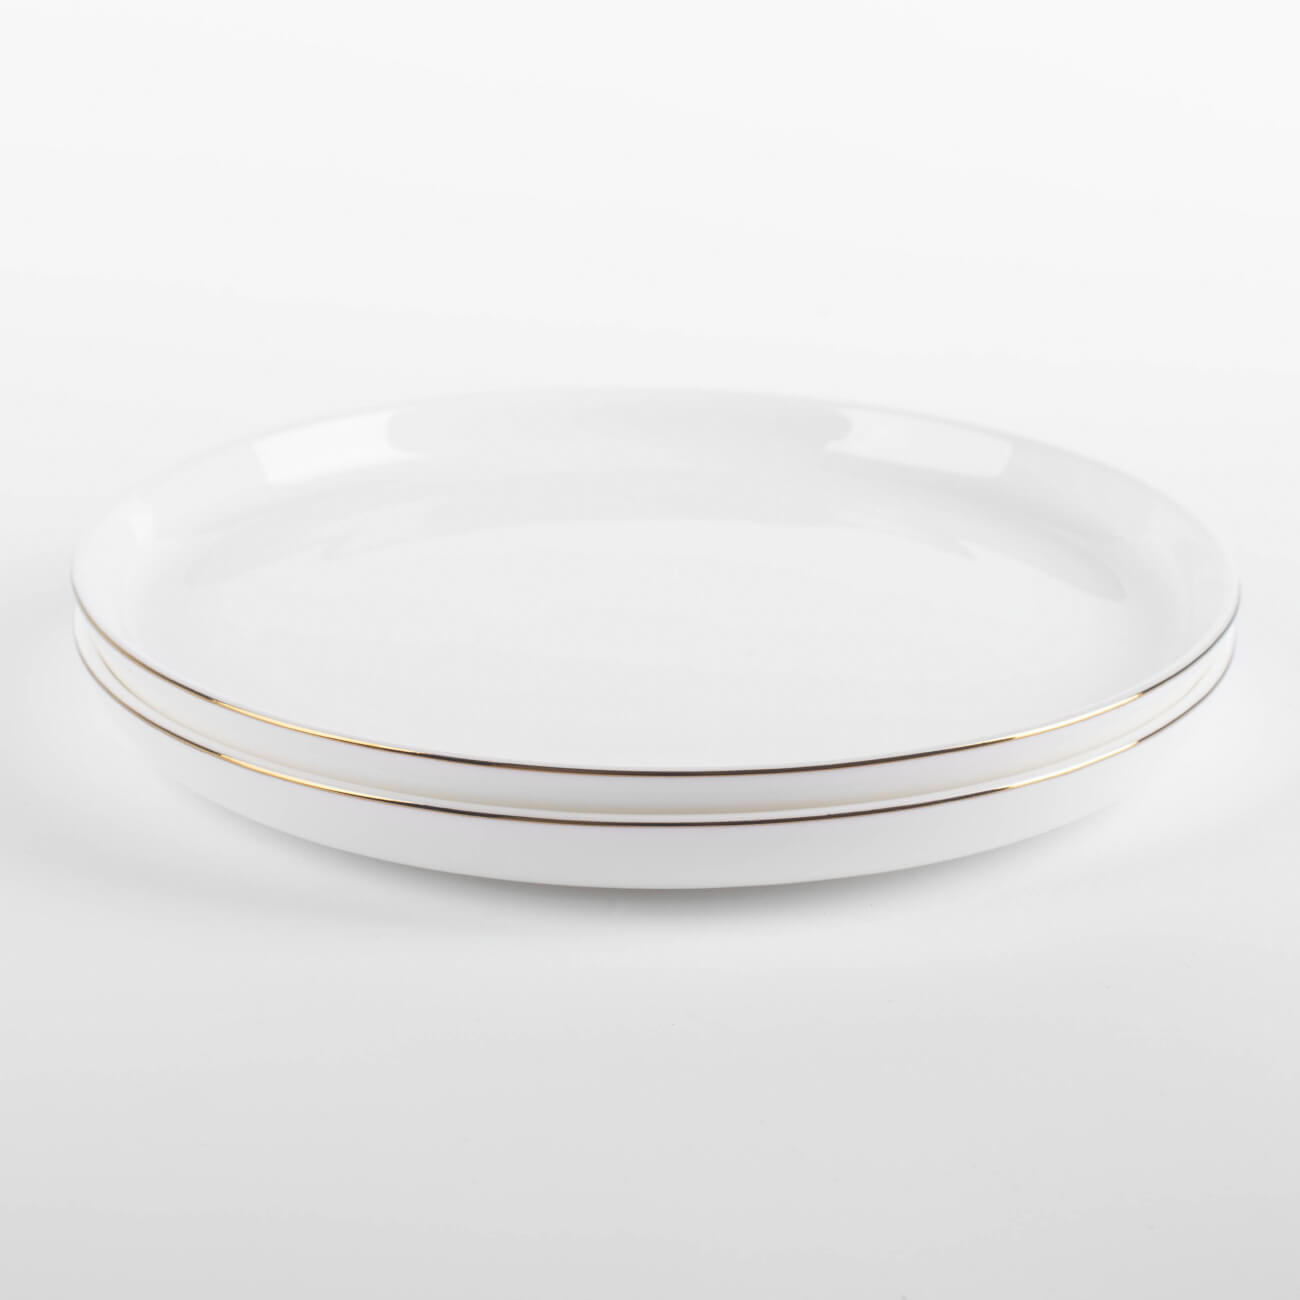 Тарелка десертная, 20 см, 2 шт, фарфор F, белая, Ideal gold тарелка десертная golden opal pink helen волна 19 5 см